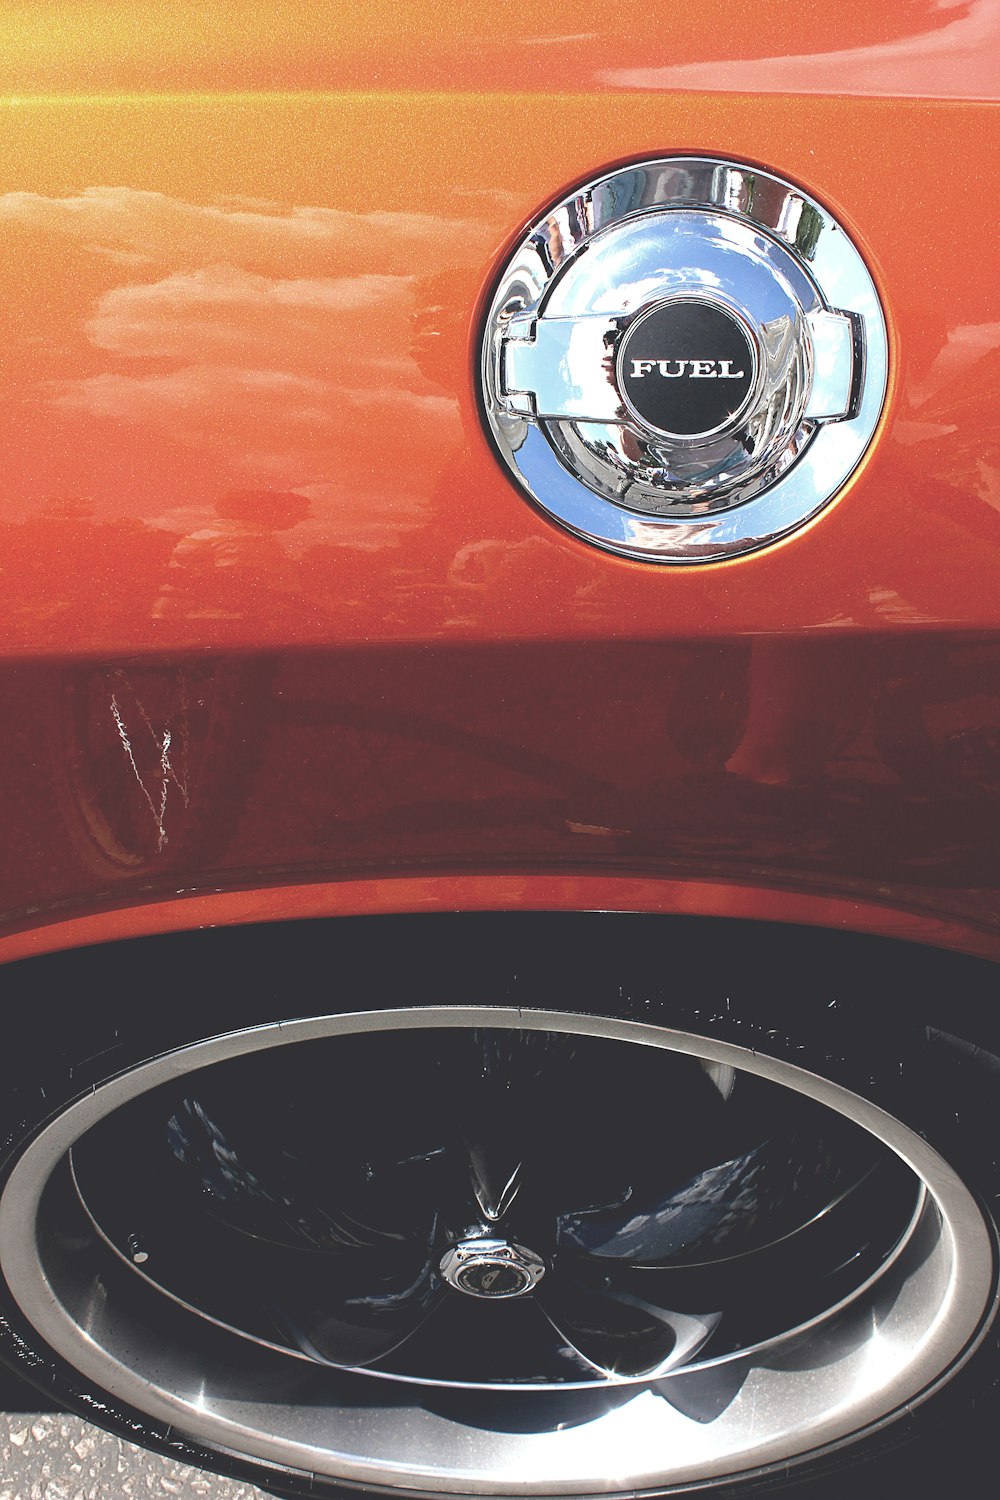 The fuel tank cap on an orange car.